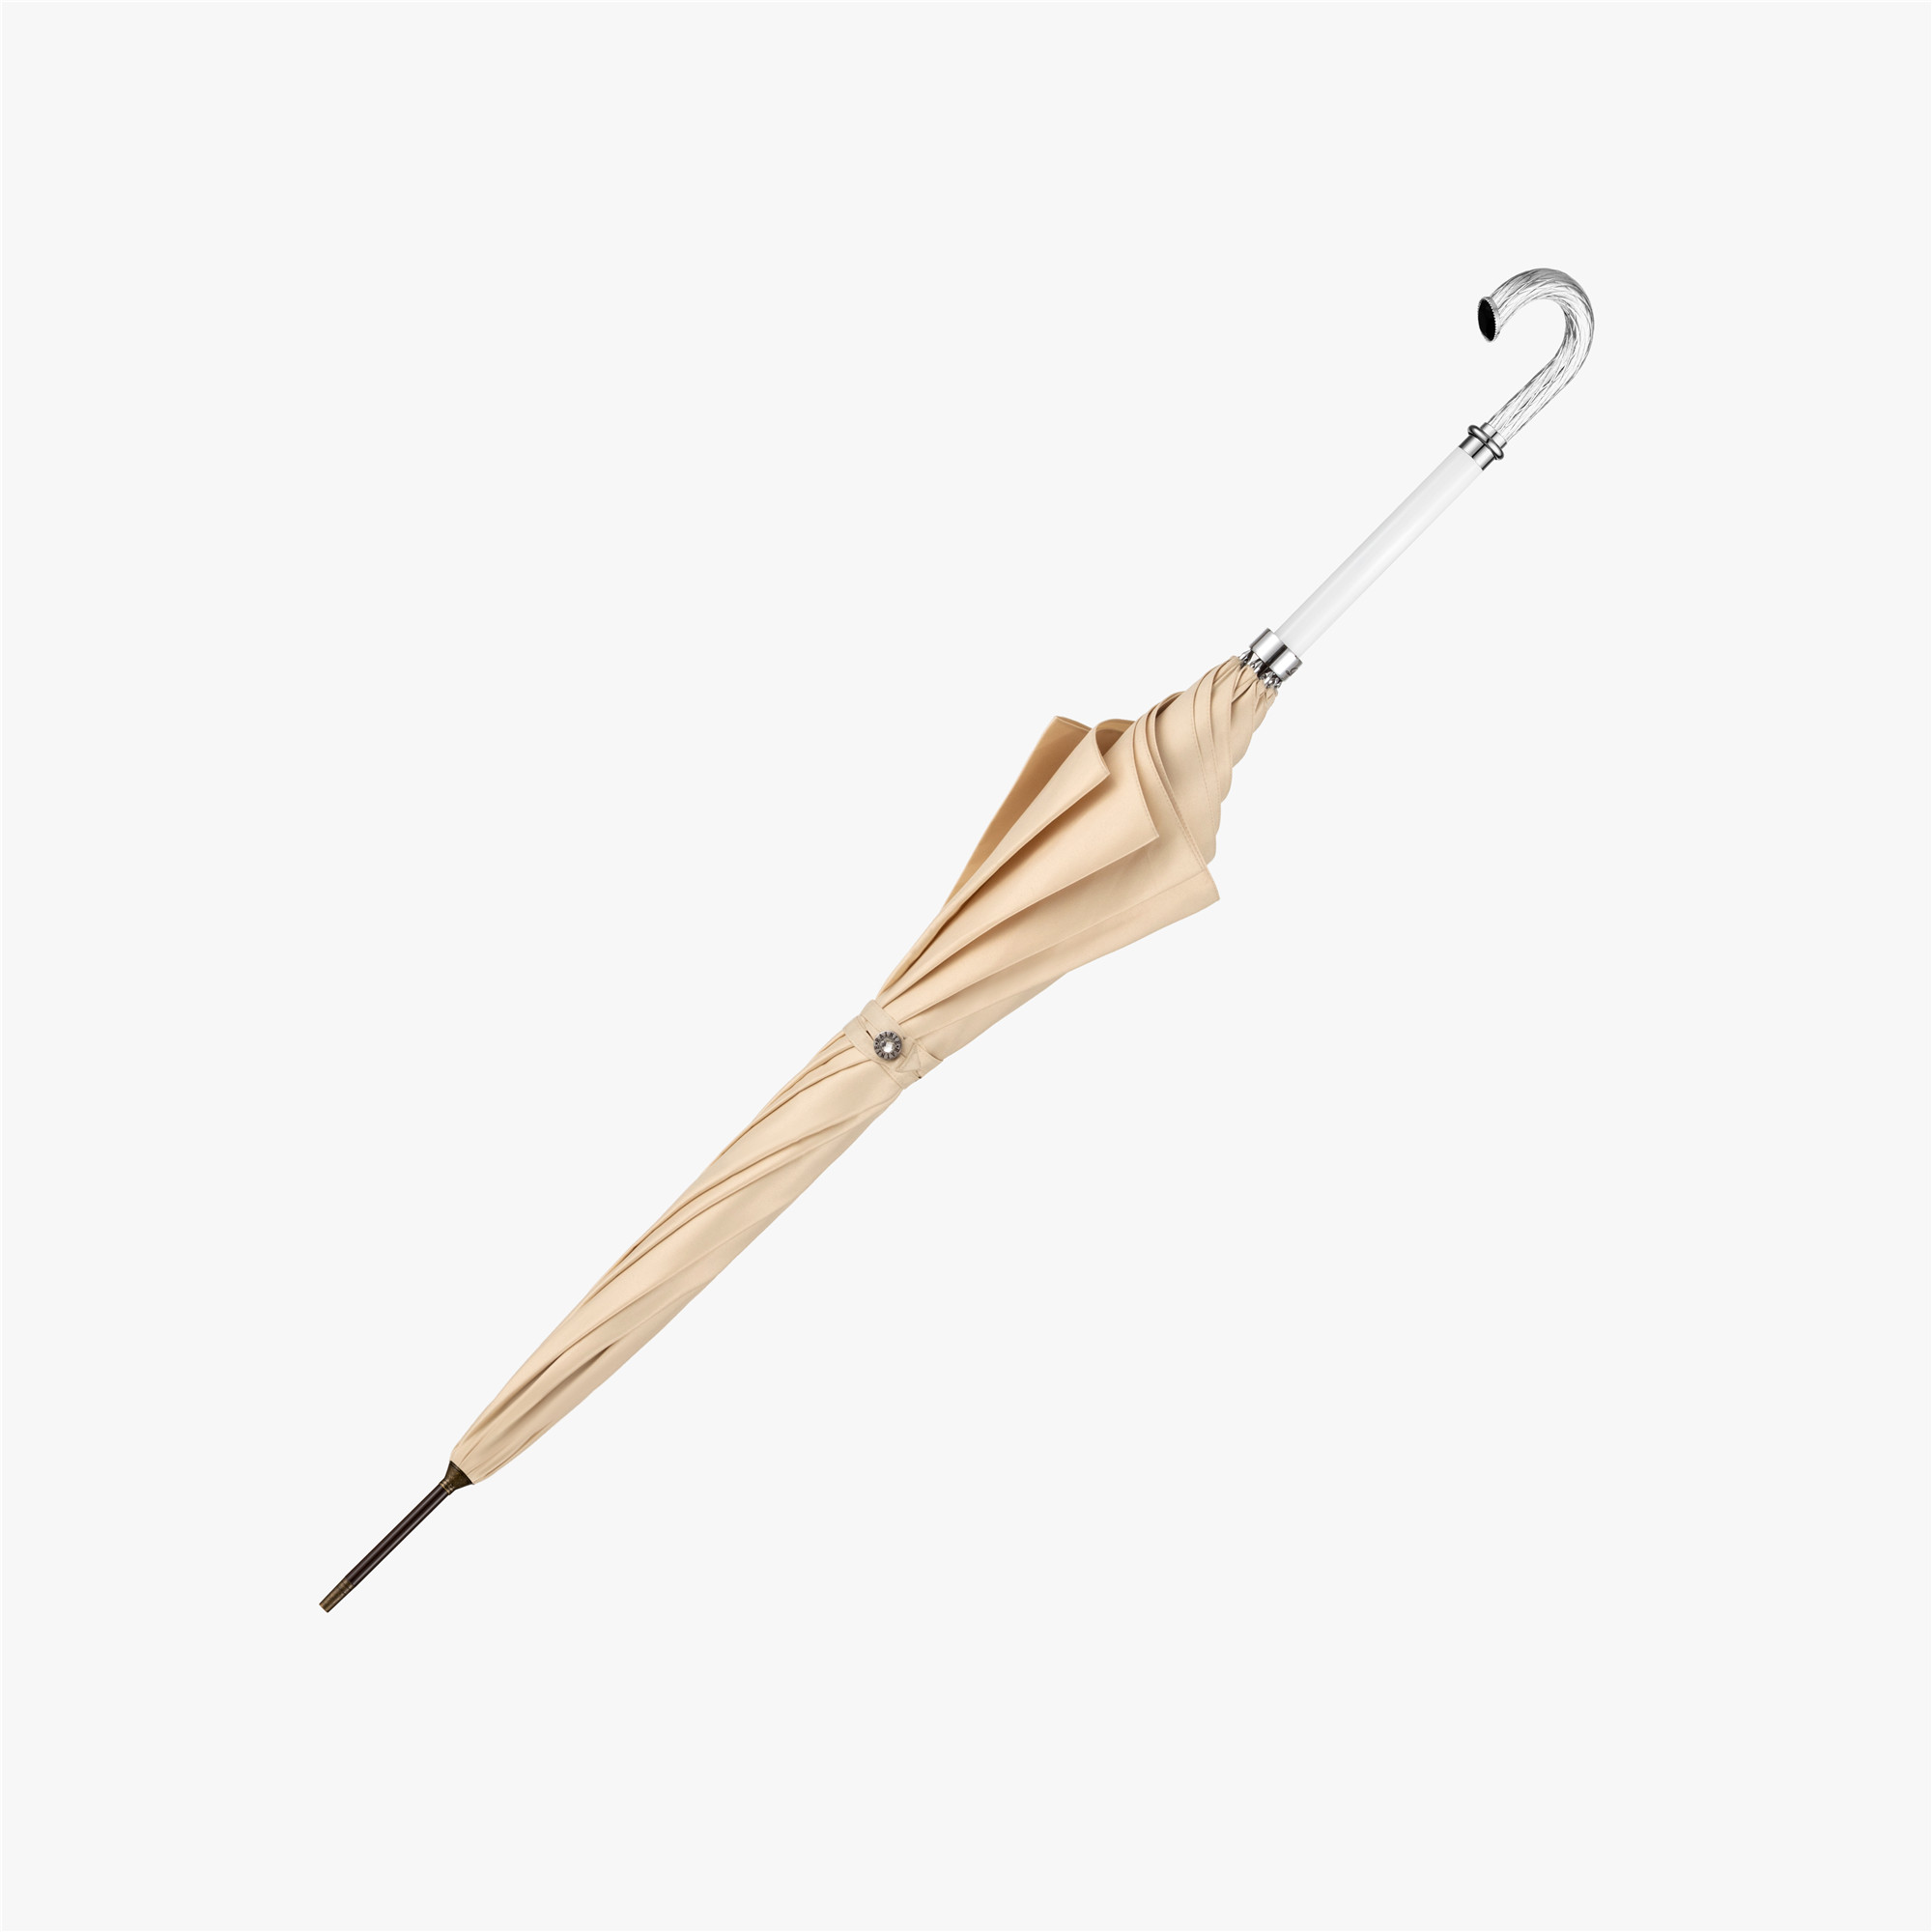 Little wooden handle long handle umbrella